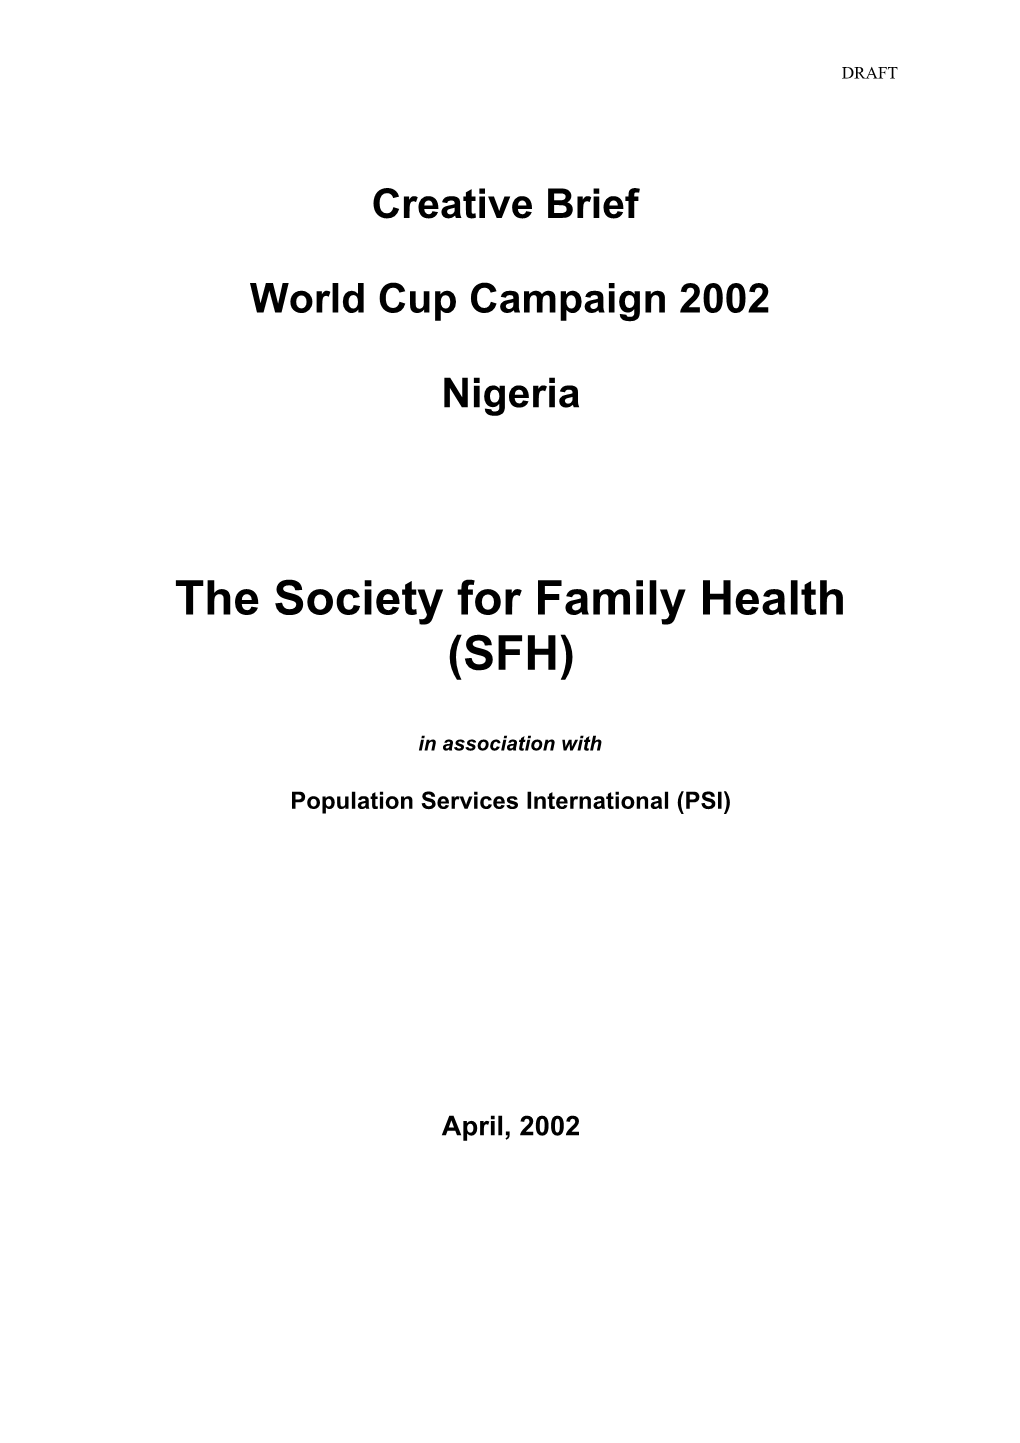 The Society for Family Health